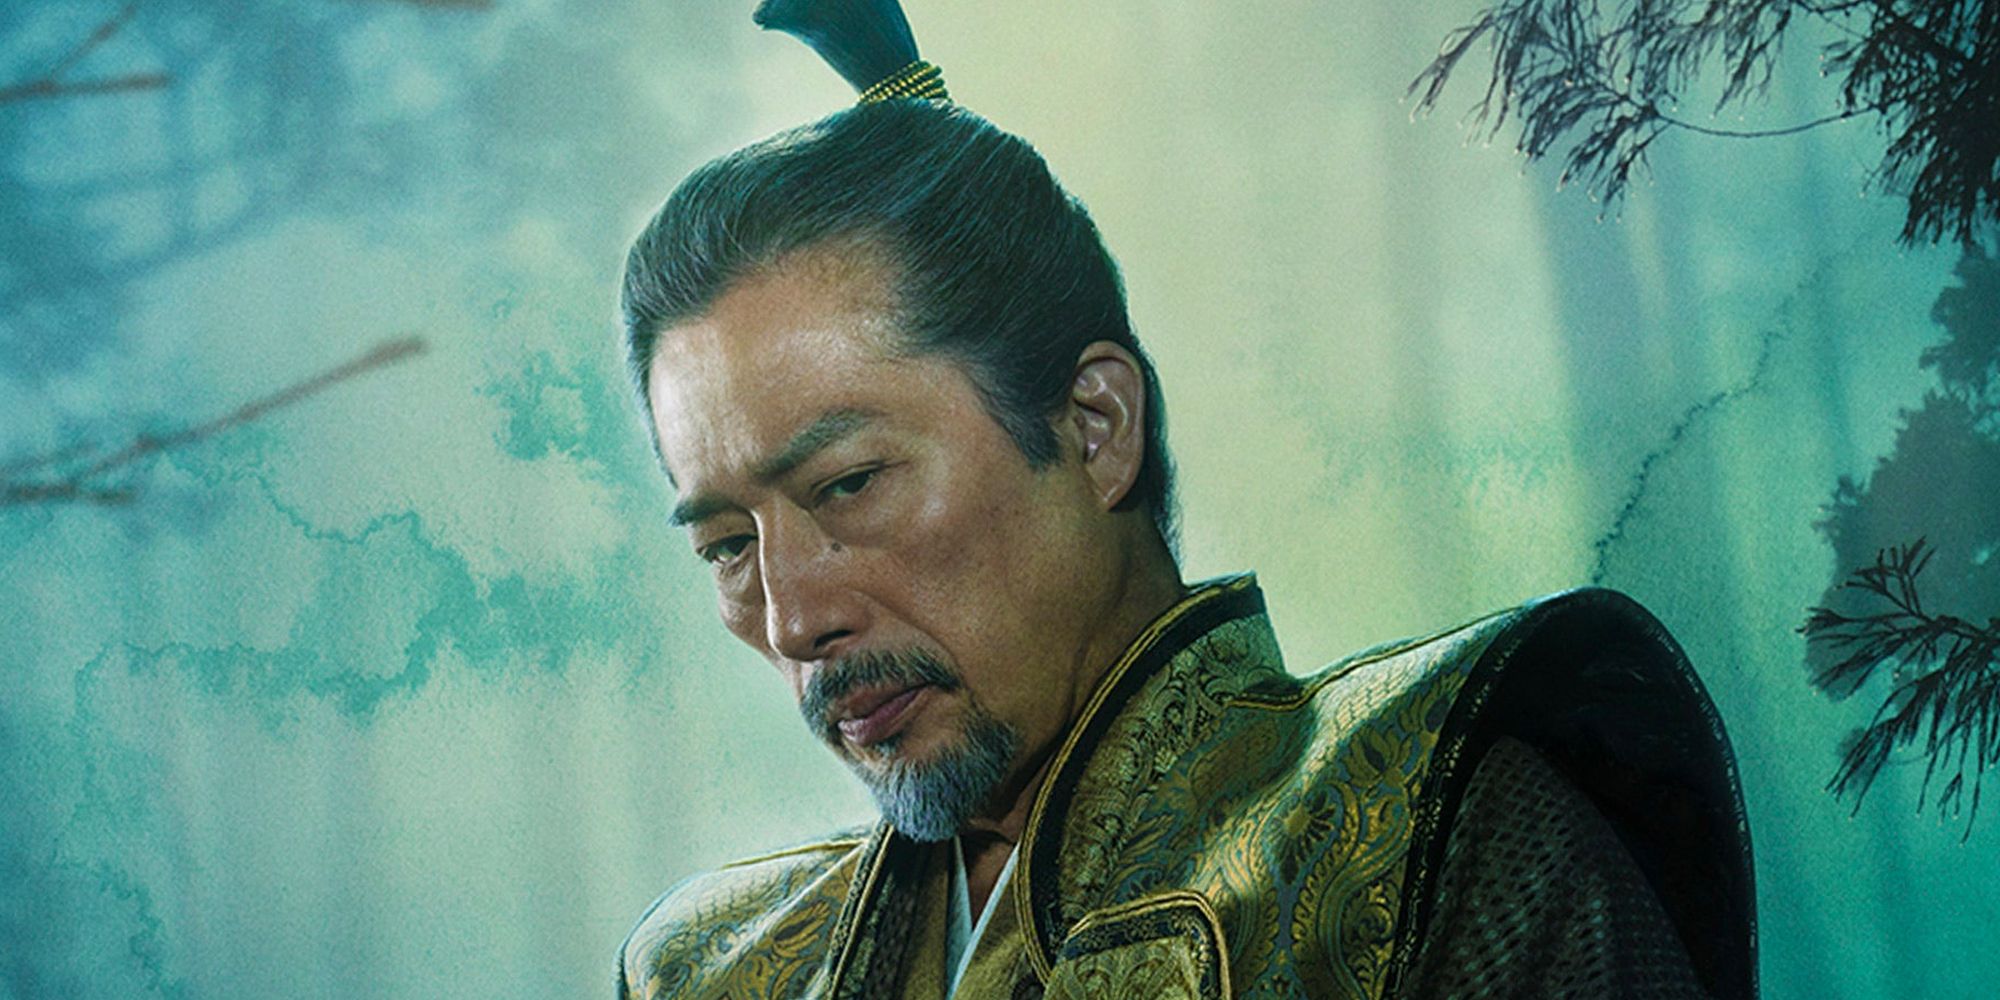 Hiroyuki Sanada as Yoshii Toranaga looking serious in the poster for Shogun 